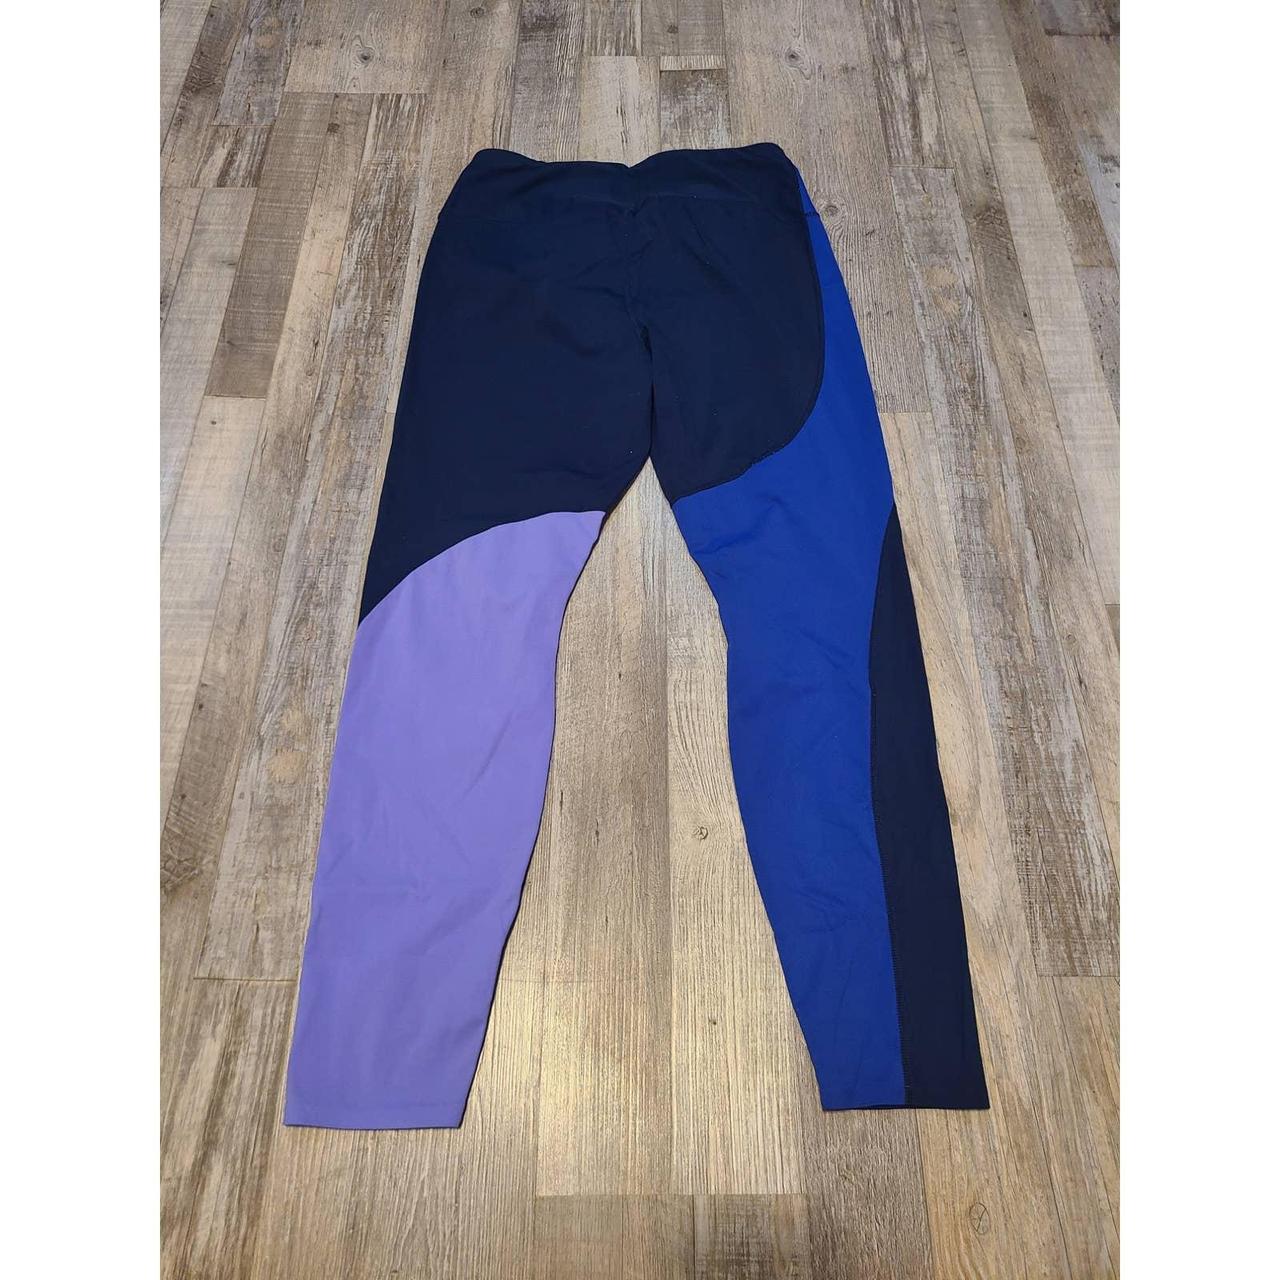 Avia xl women's blue and purple athletic leggings RN - Depop